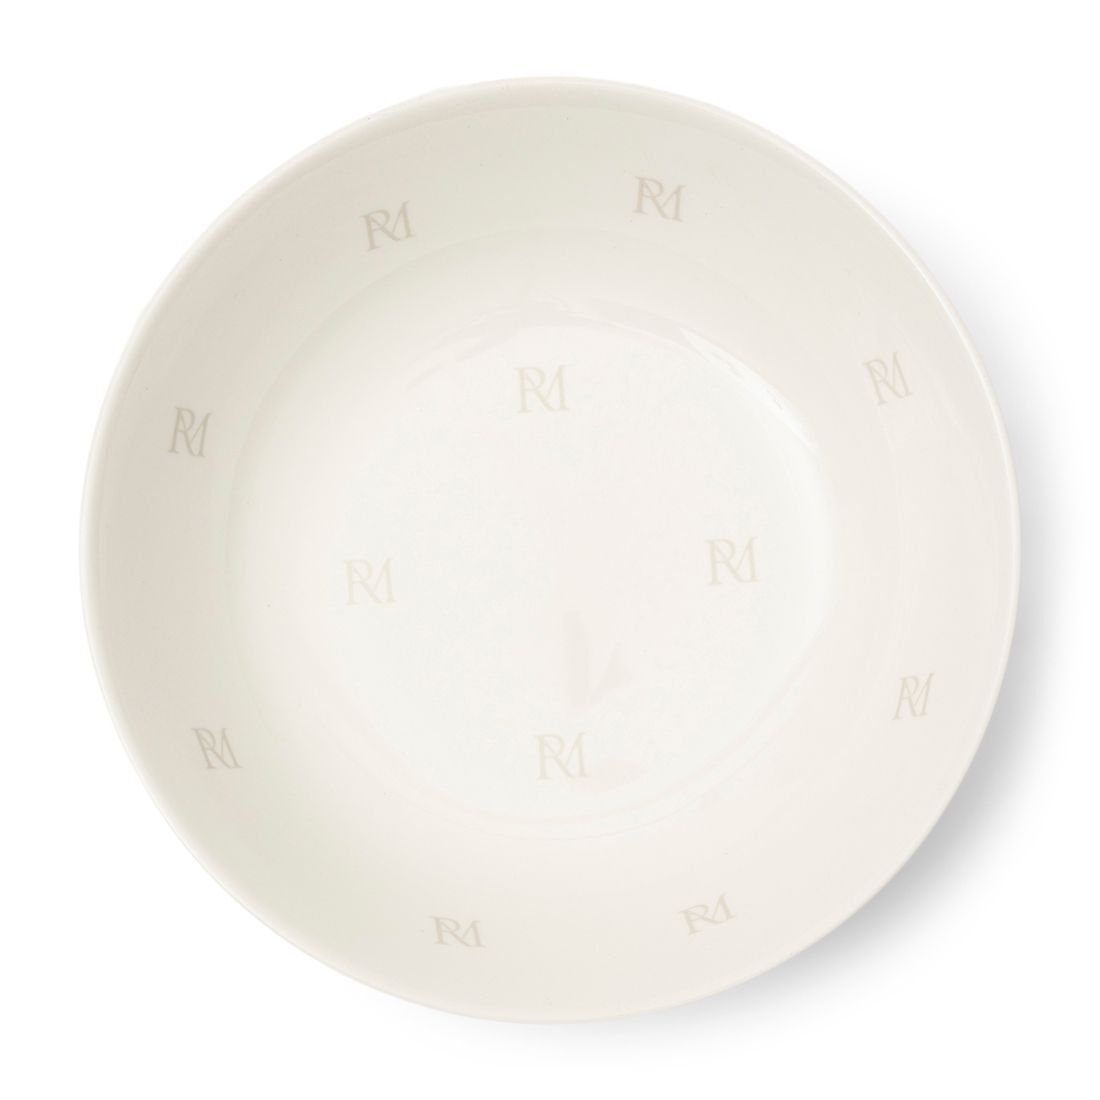 Miska RM monogram M śr. 20,5cm porcelana biała